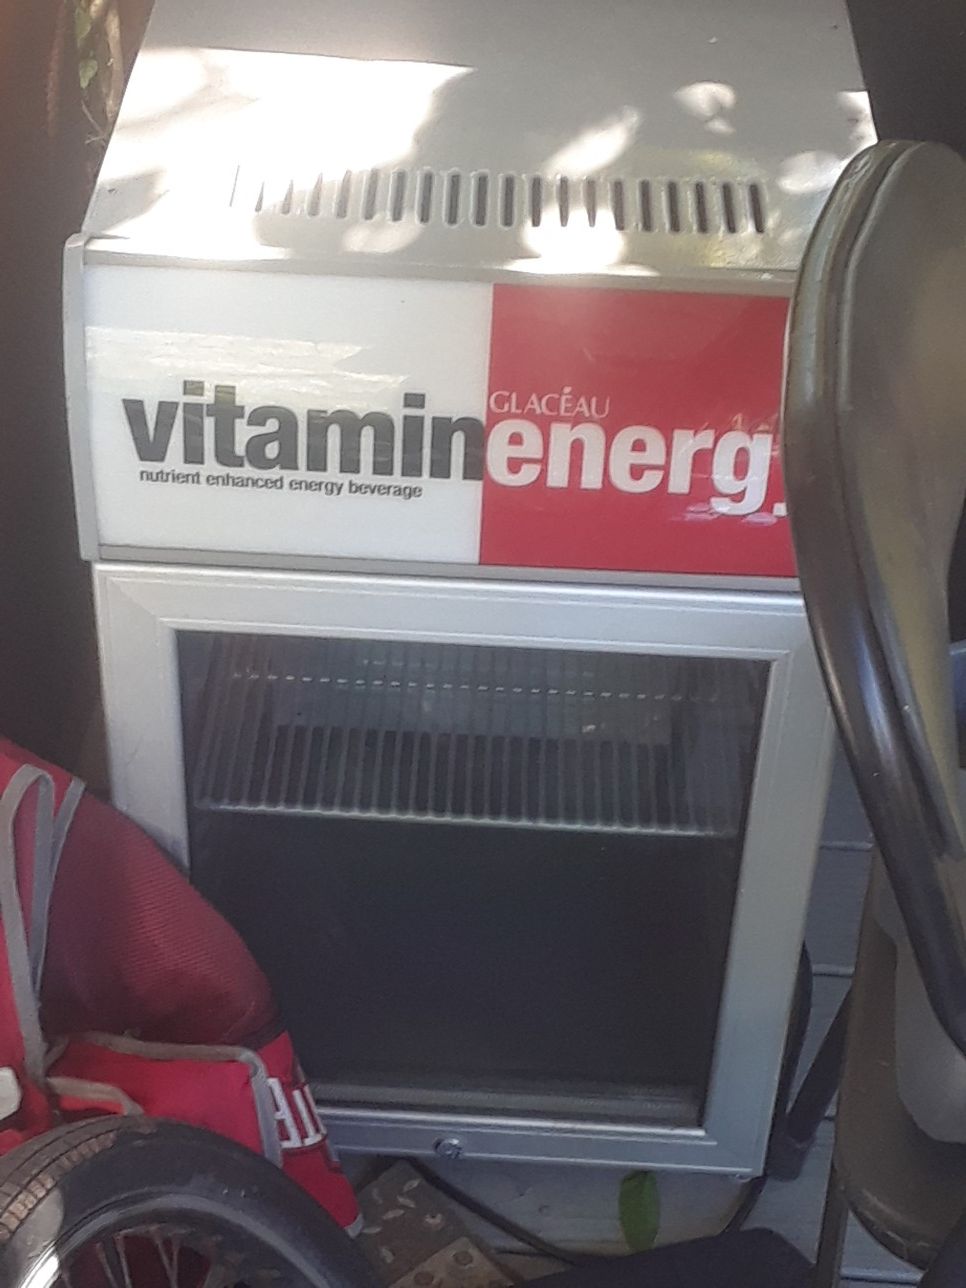 Vitamin energy mini fridge cooler